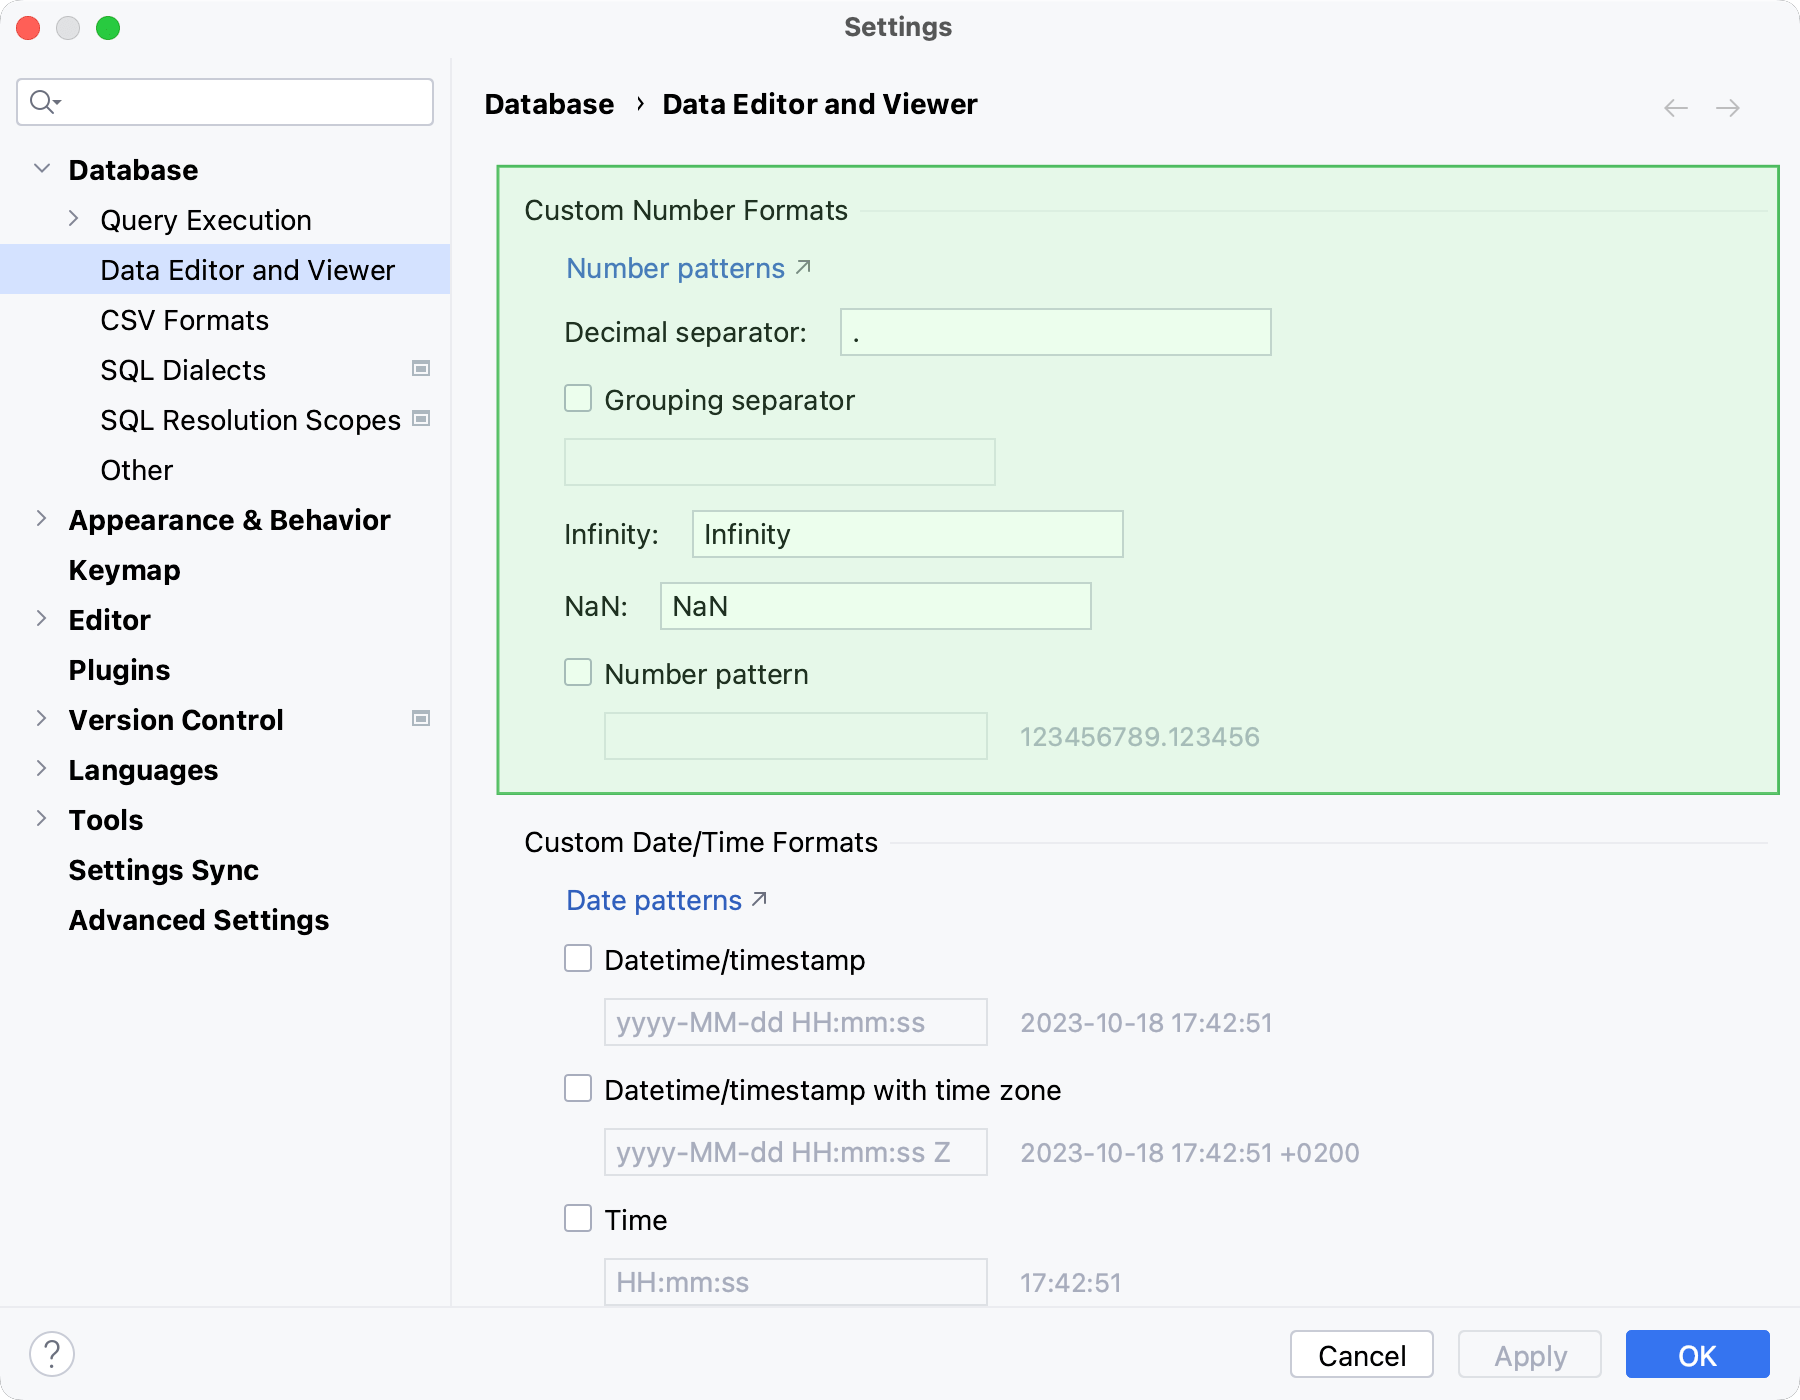 Custom Number Formats settings in the IDE settings dialog